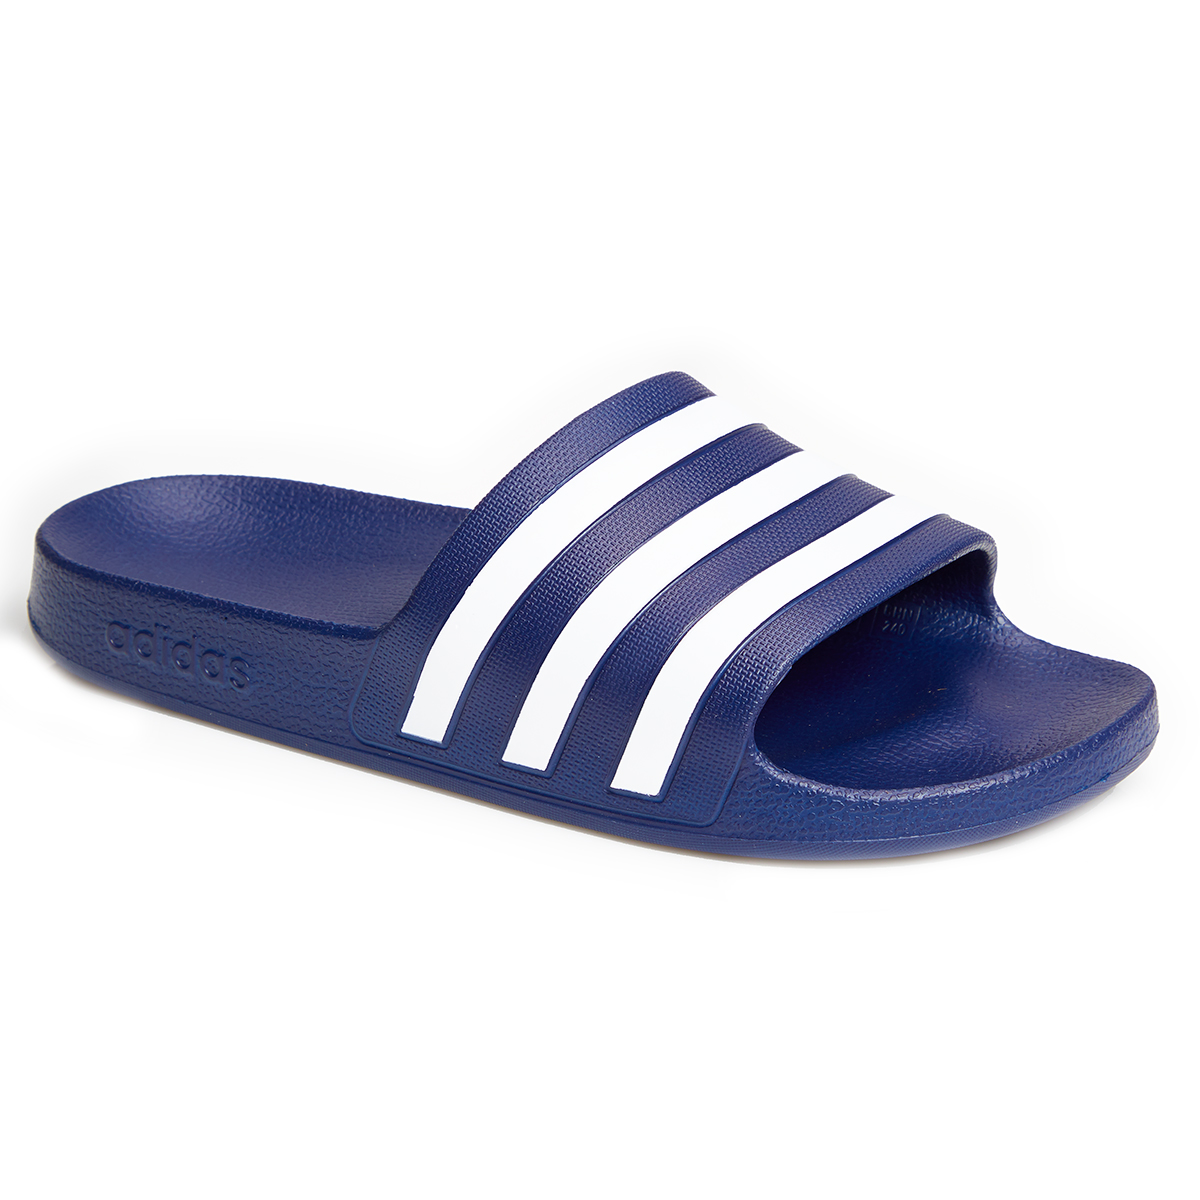 Adidas Women's Adilette Aqua Slide Sandals - Blue, 7